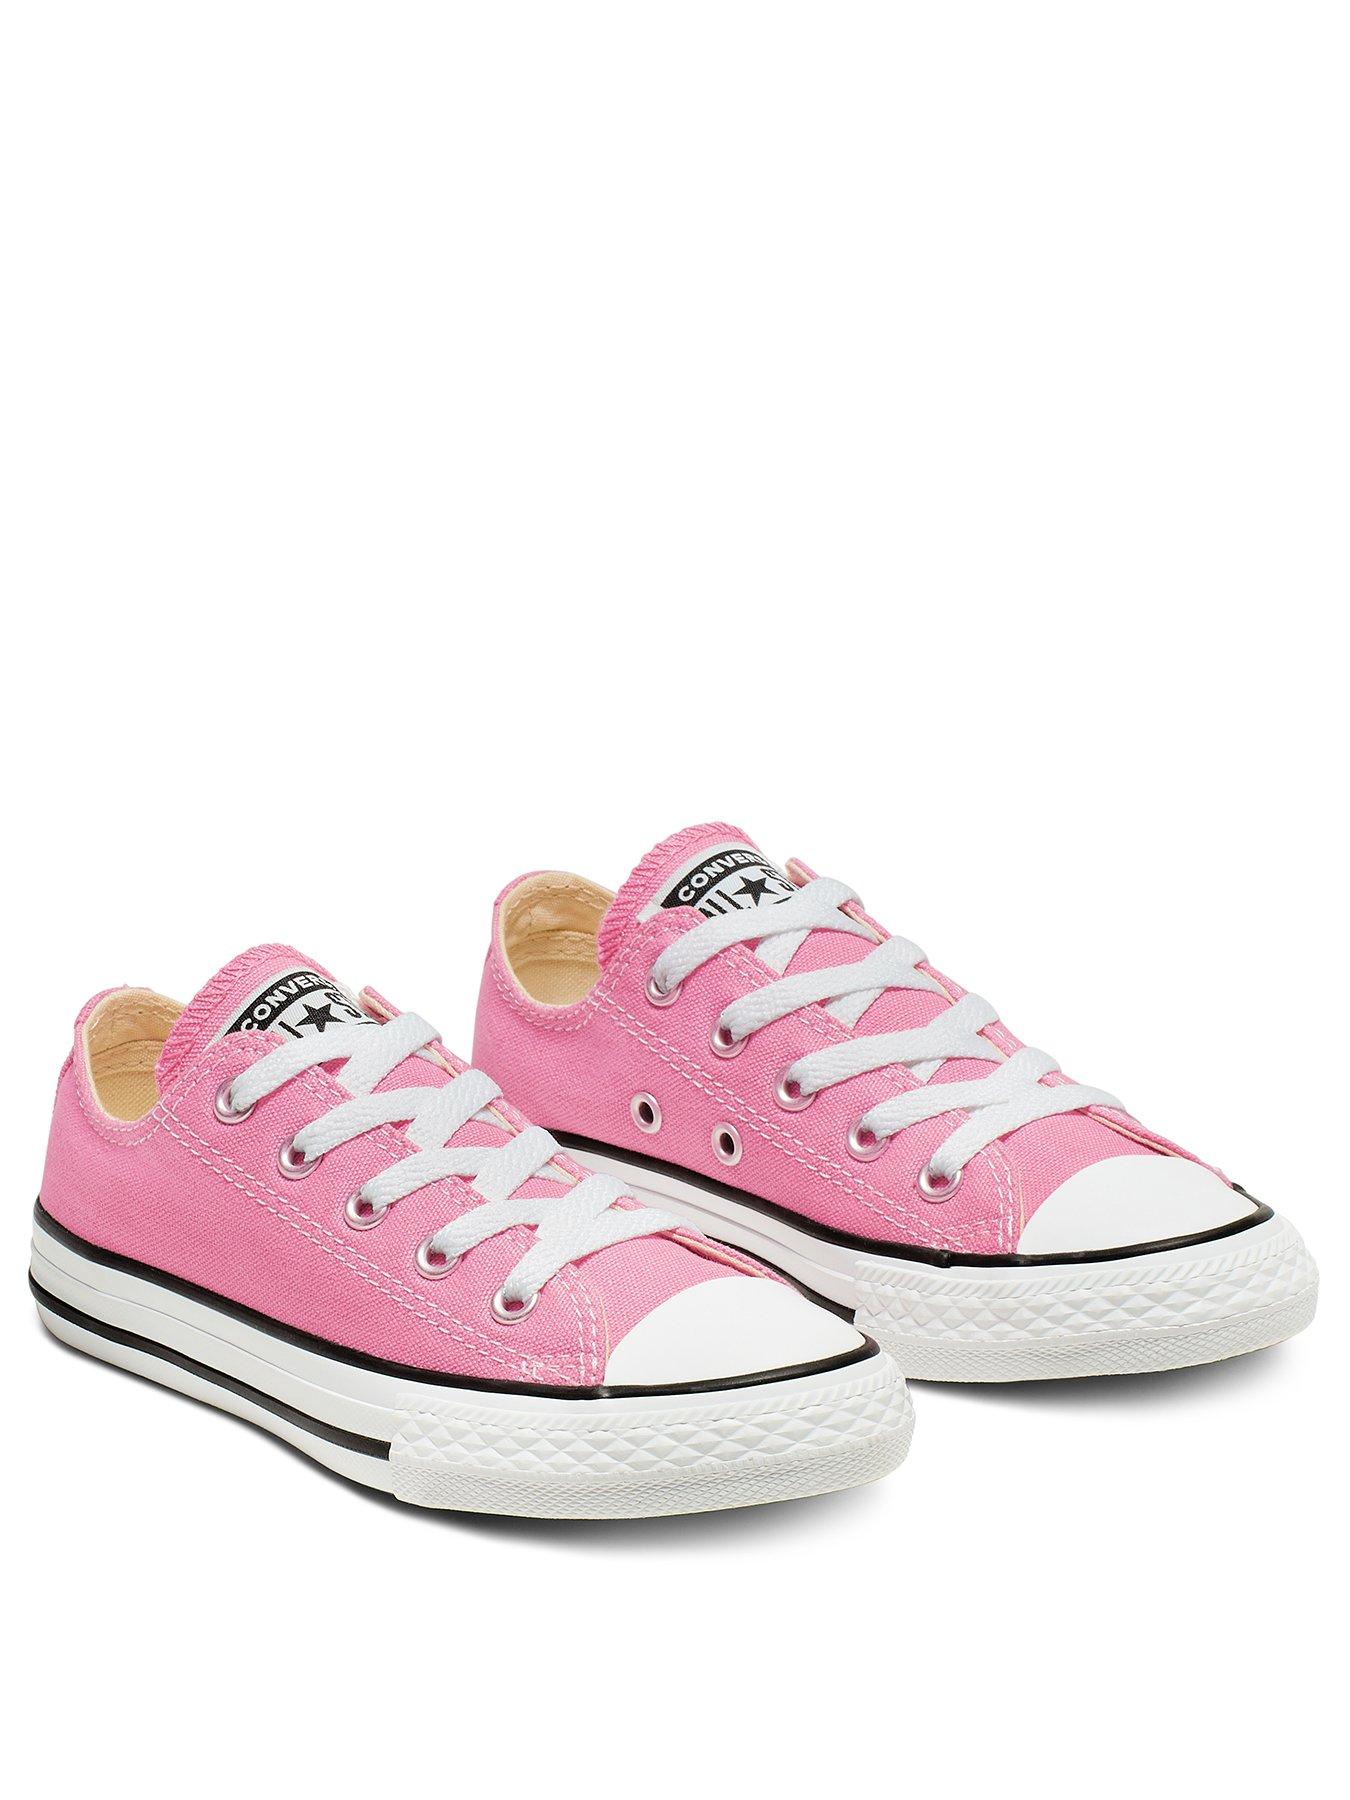 baby girl pink converse